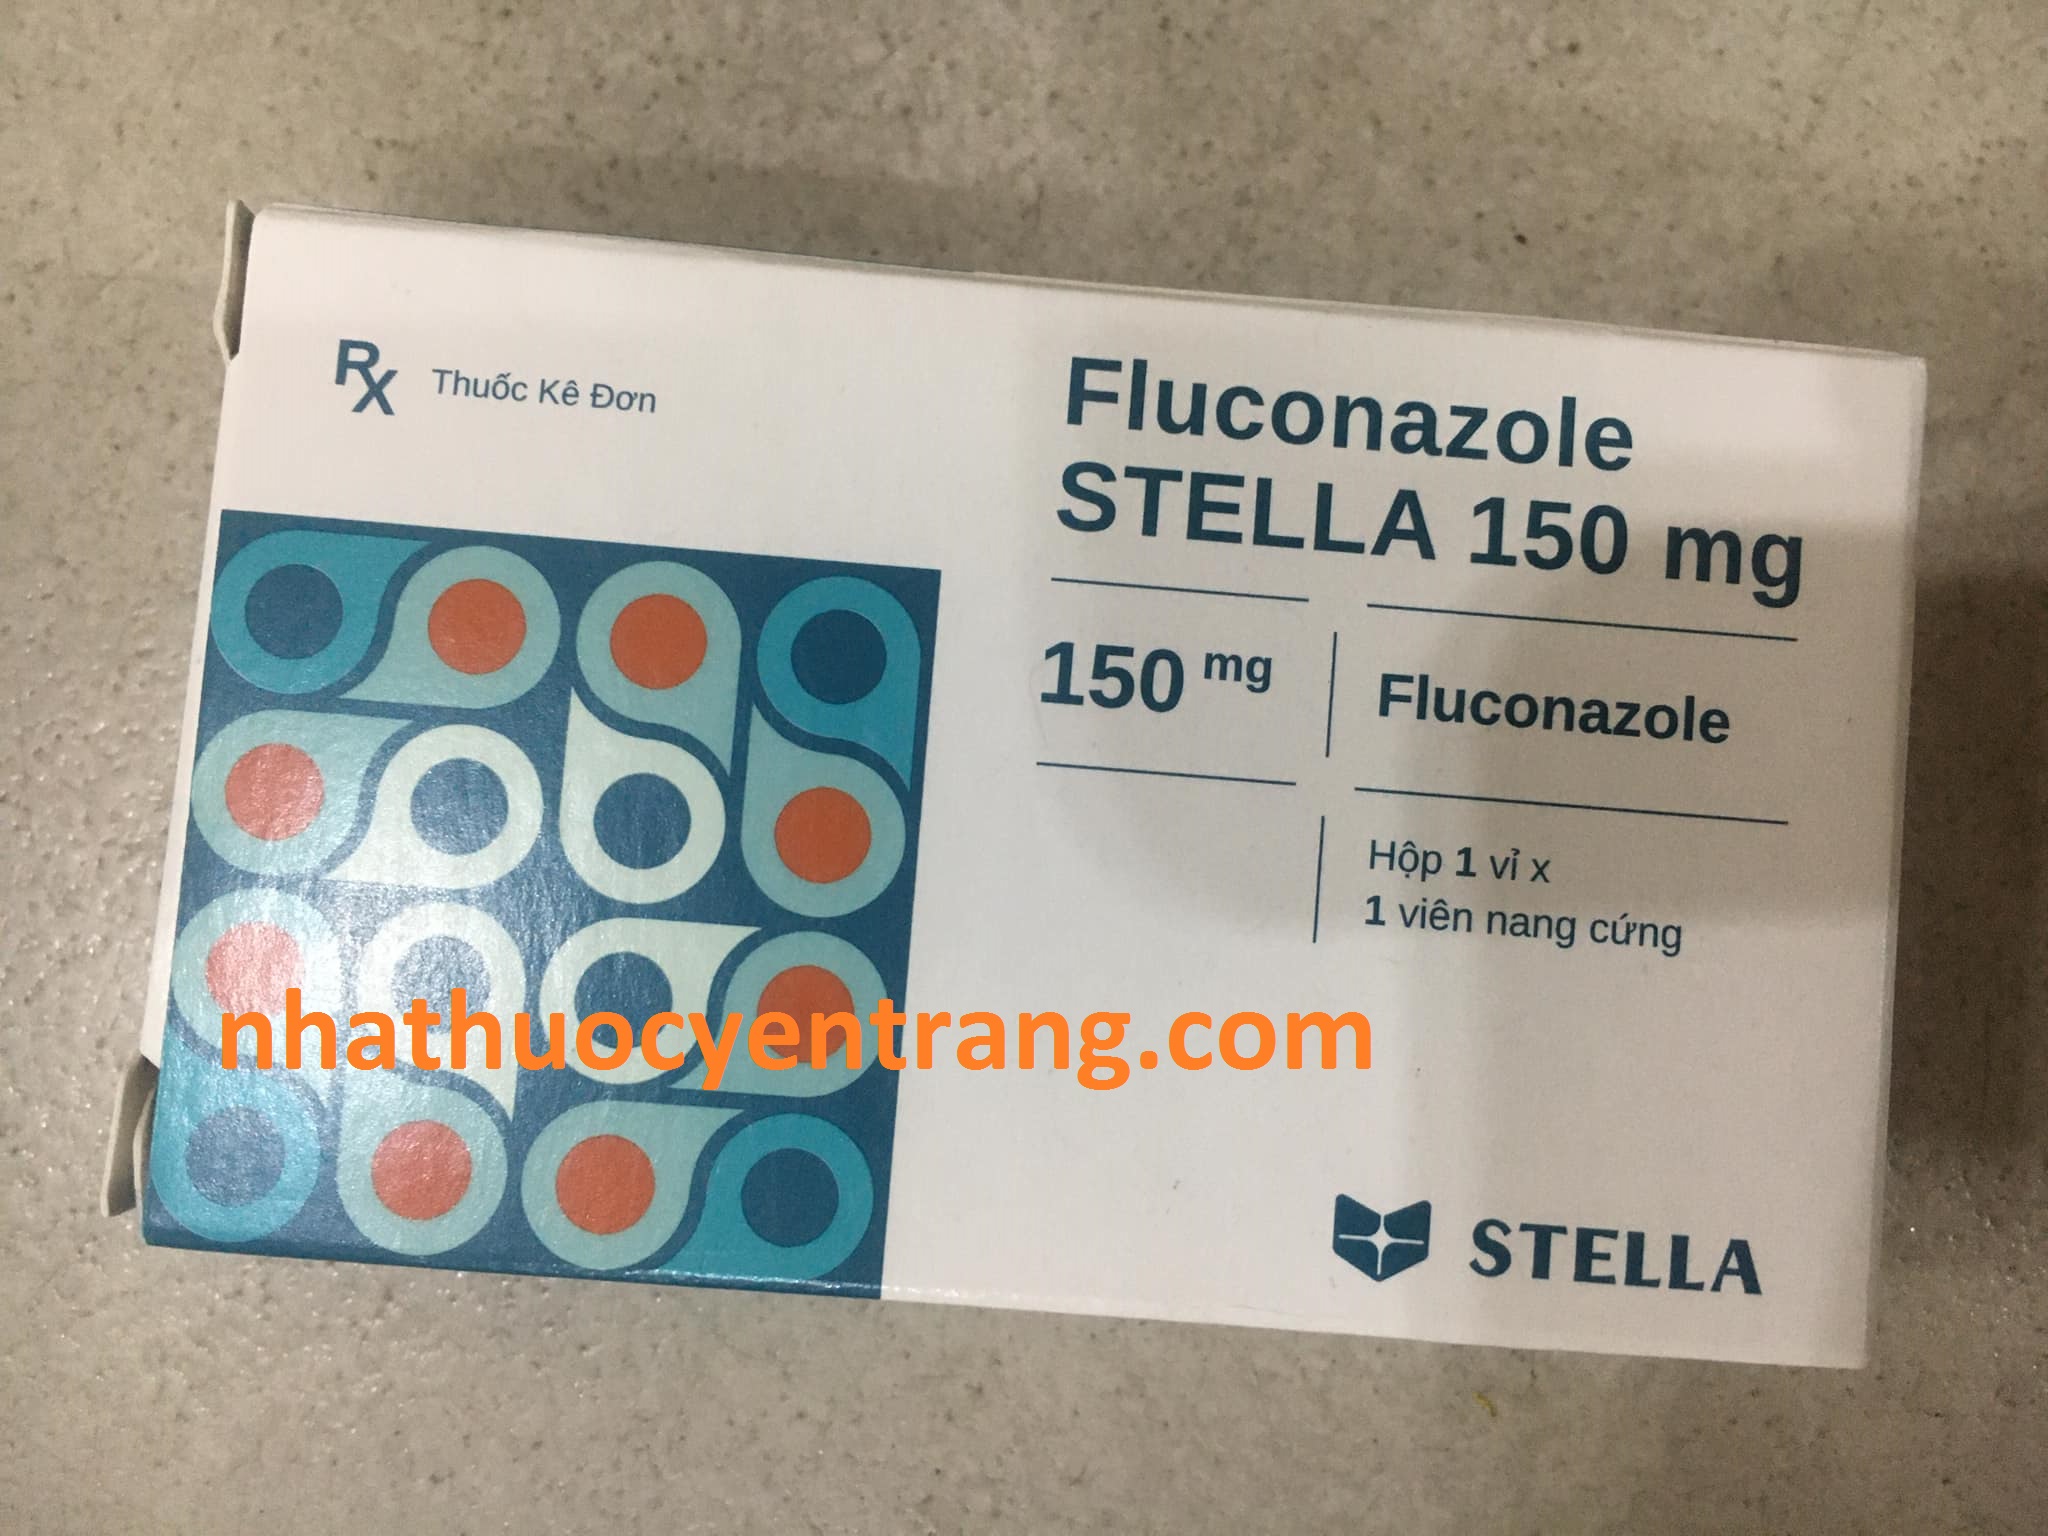 Fluconazole 150mg Stella